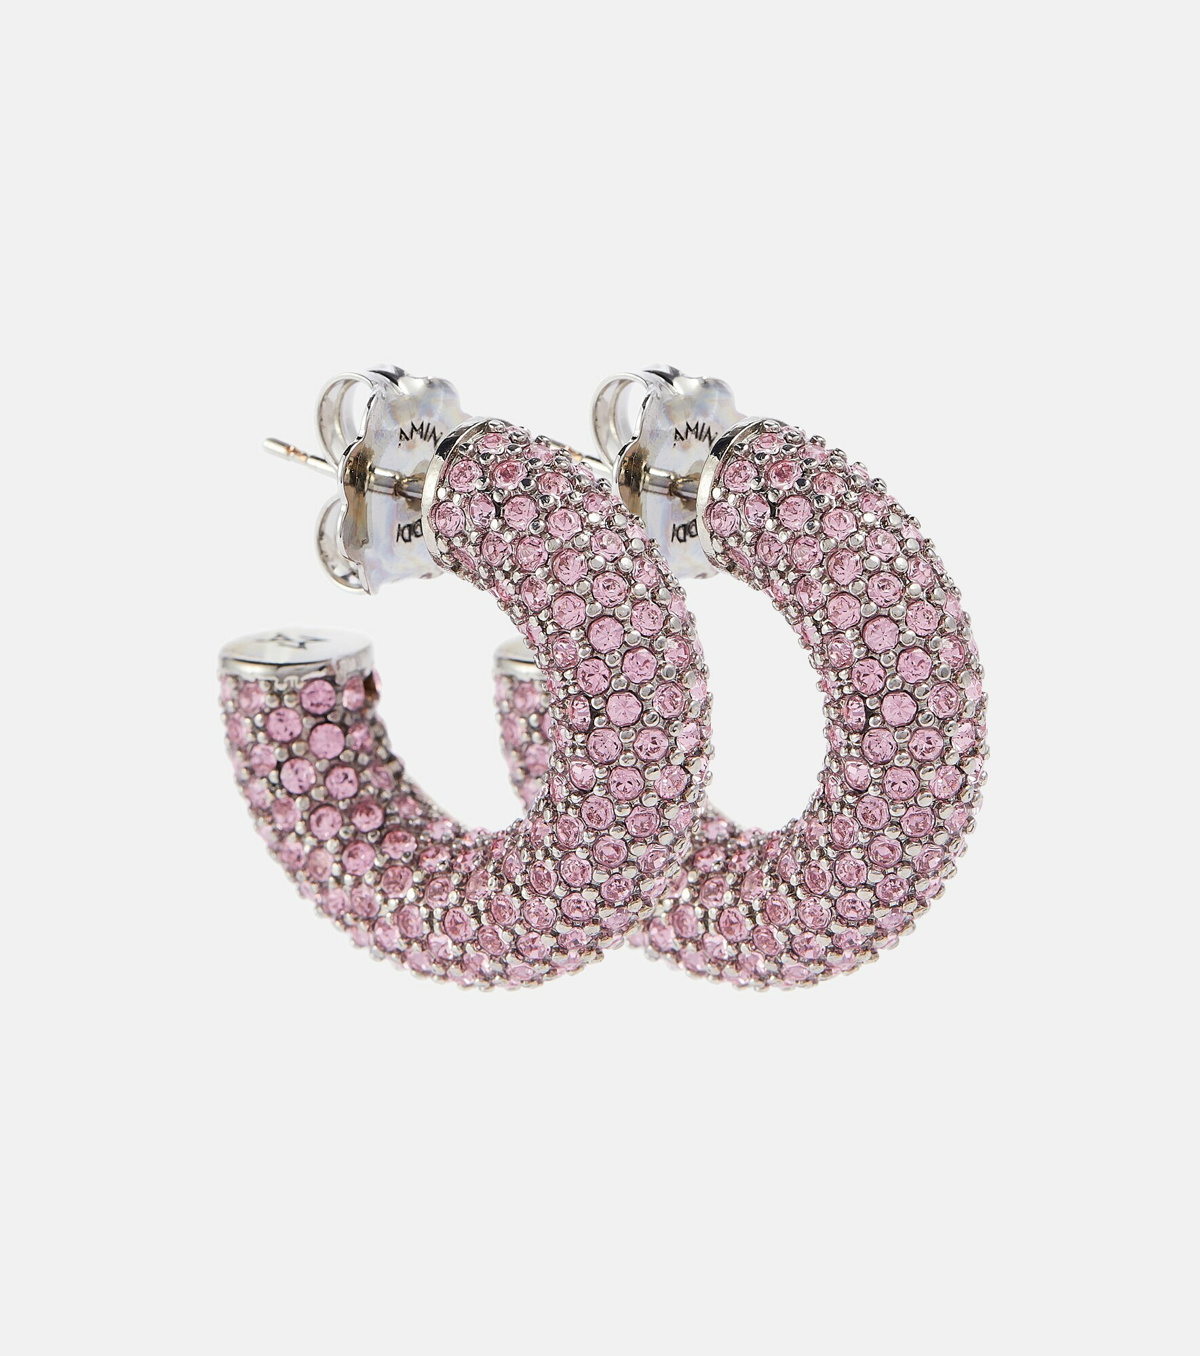 Rih Small Embellished Hoop Earrings in Silver - Amina Muaddi